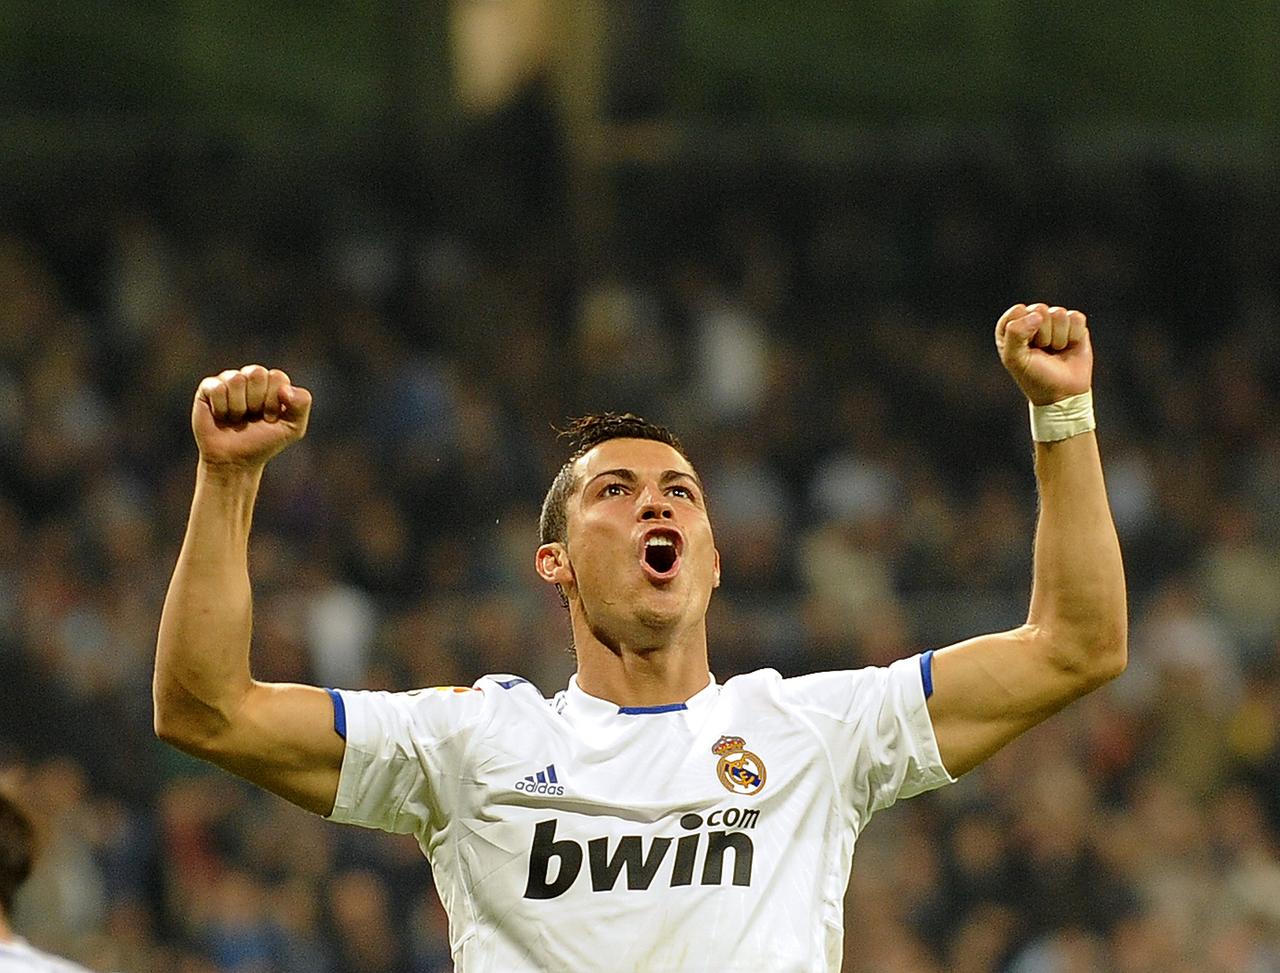 http://1.bp.blogspot.com/-2dhxPT7Svf0/TwxygIjvAkI/AAAAAAAAHy0/r4vtI63yN9M/s1600/Cristiano-Ronaldo-Real-Madrid-Celebration-Goal-Photos.jpg